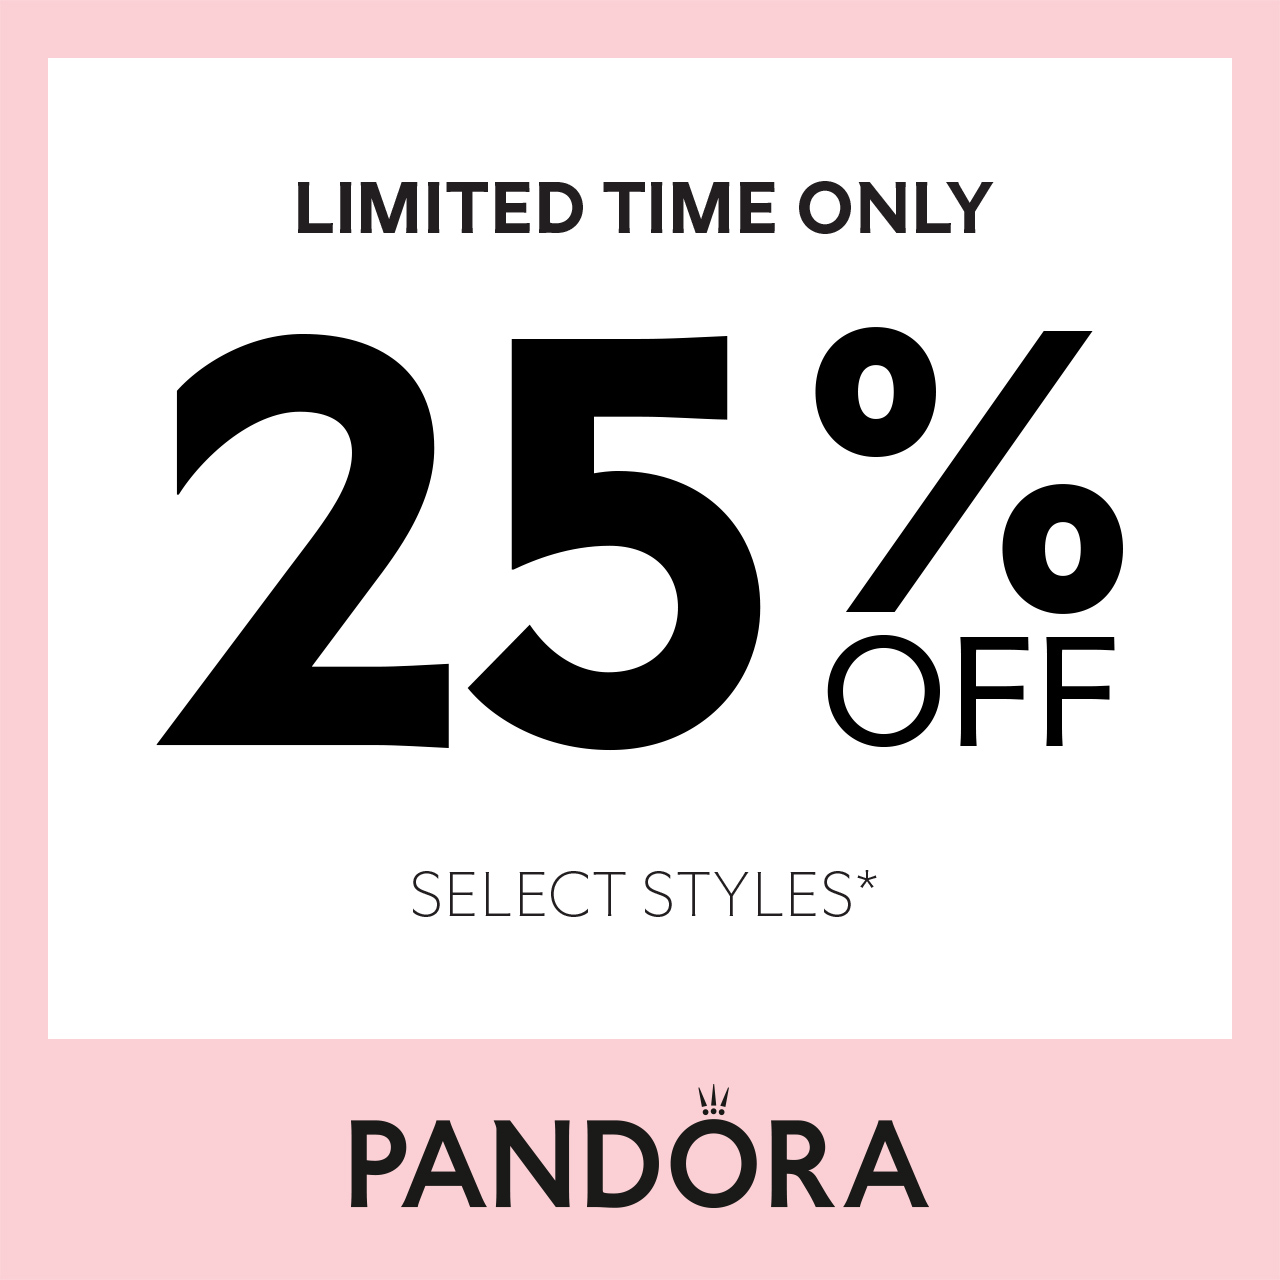 Pandora Campaign 130 Up to 25 off select styles at Pandora. EN 1280x1280 1